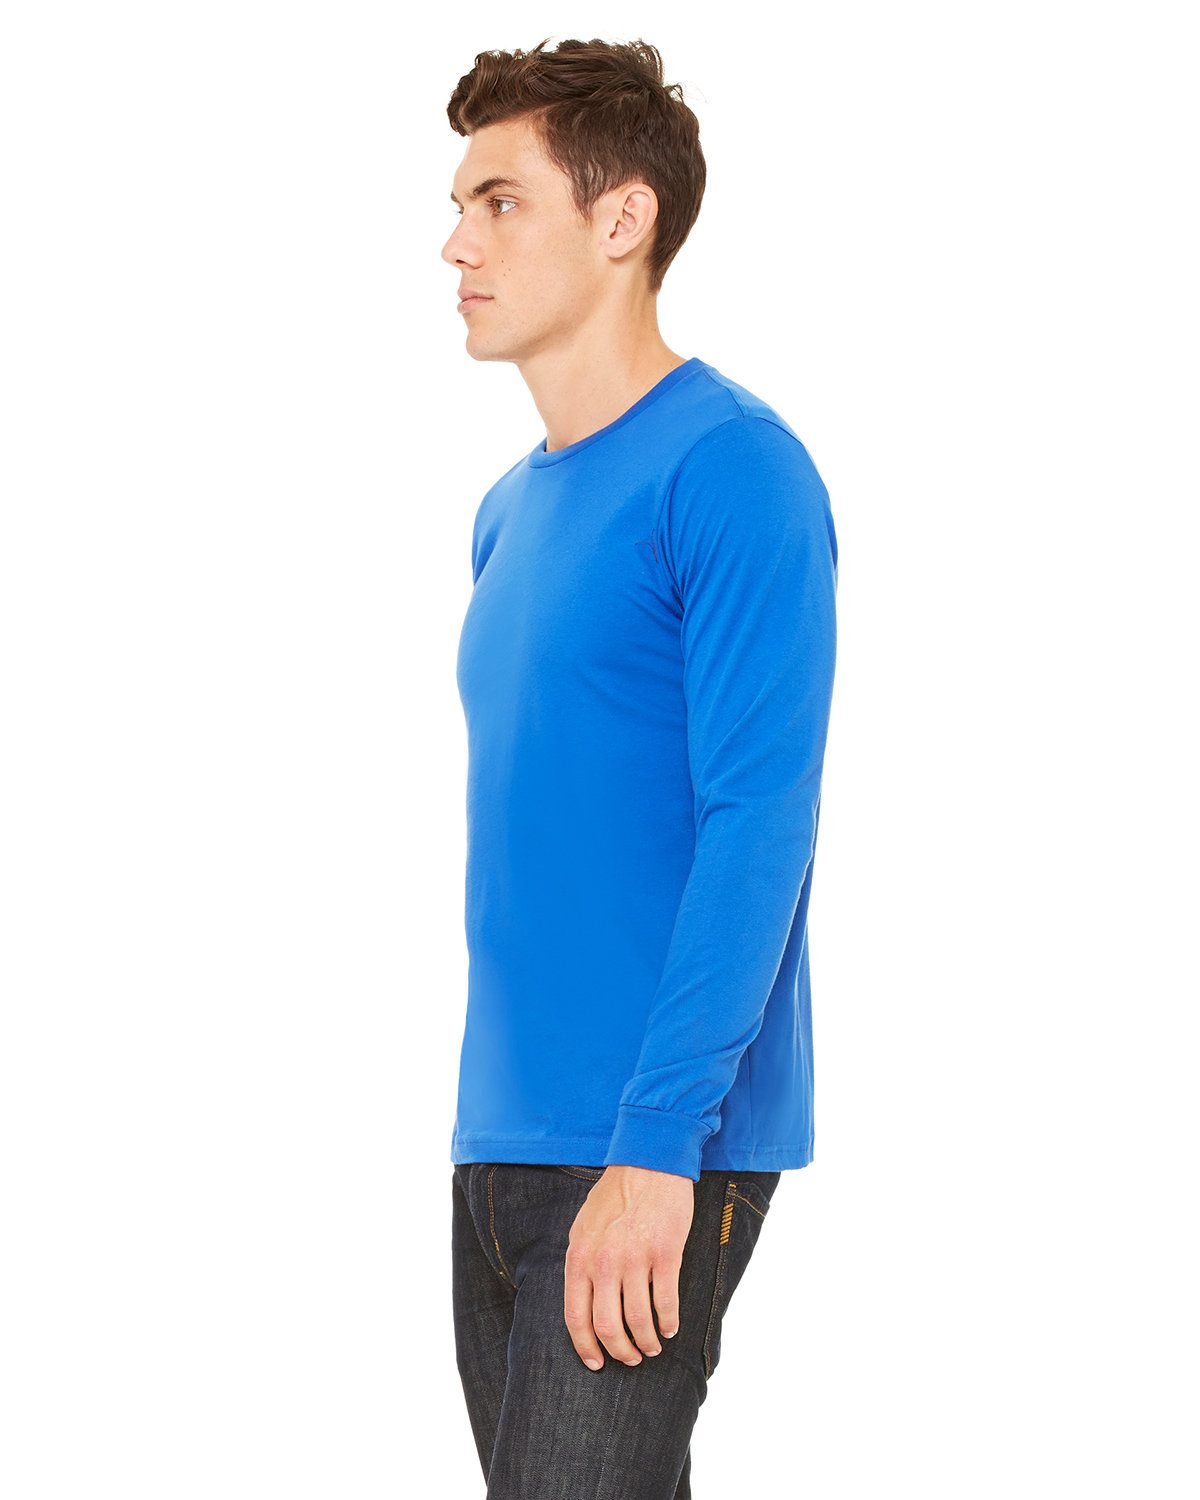 Bella + Canvas Unisex Jersey Long-Sleeve T-Shirt #3501 Royal Blue Side